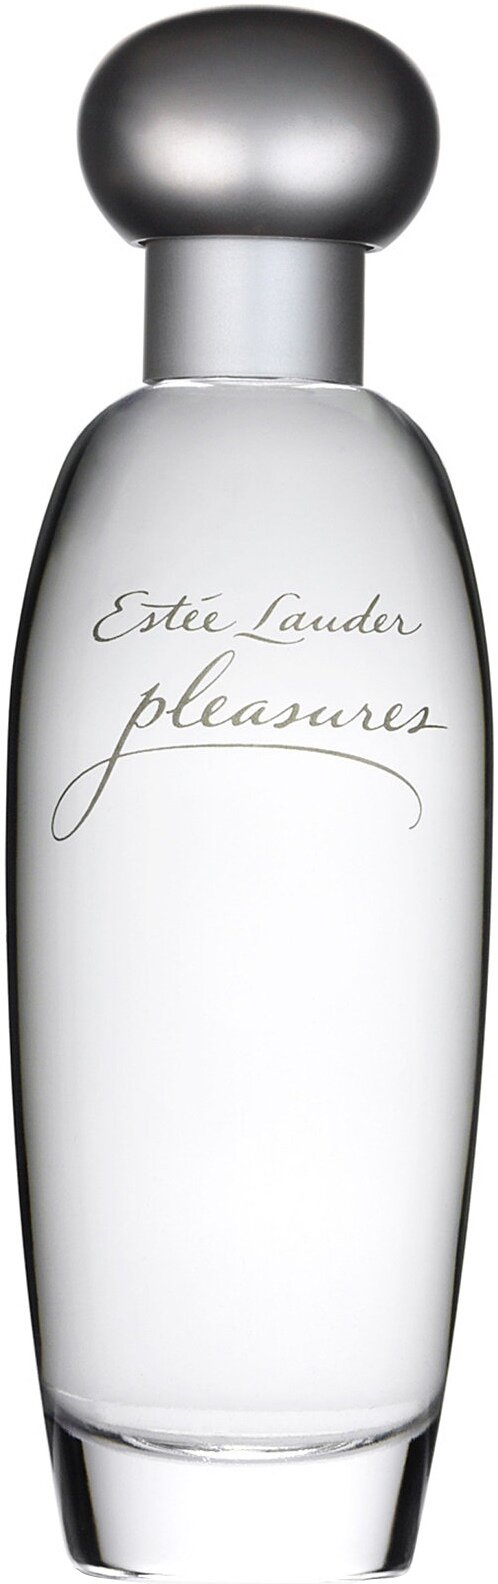 Estee Lauder Pleasures парфюмированная вода 100мл